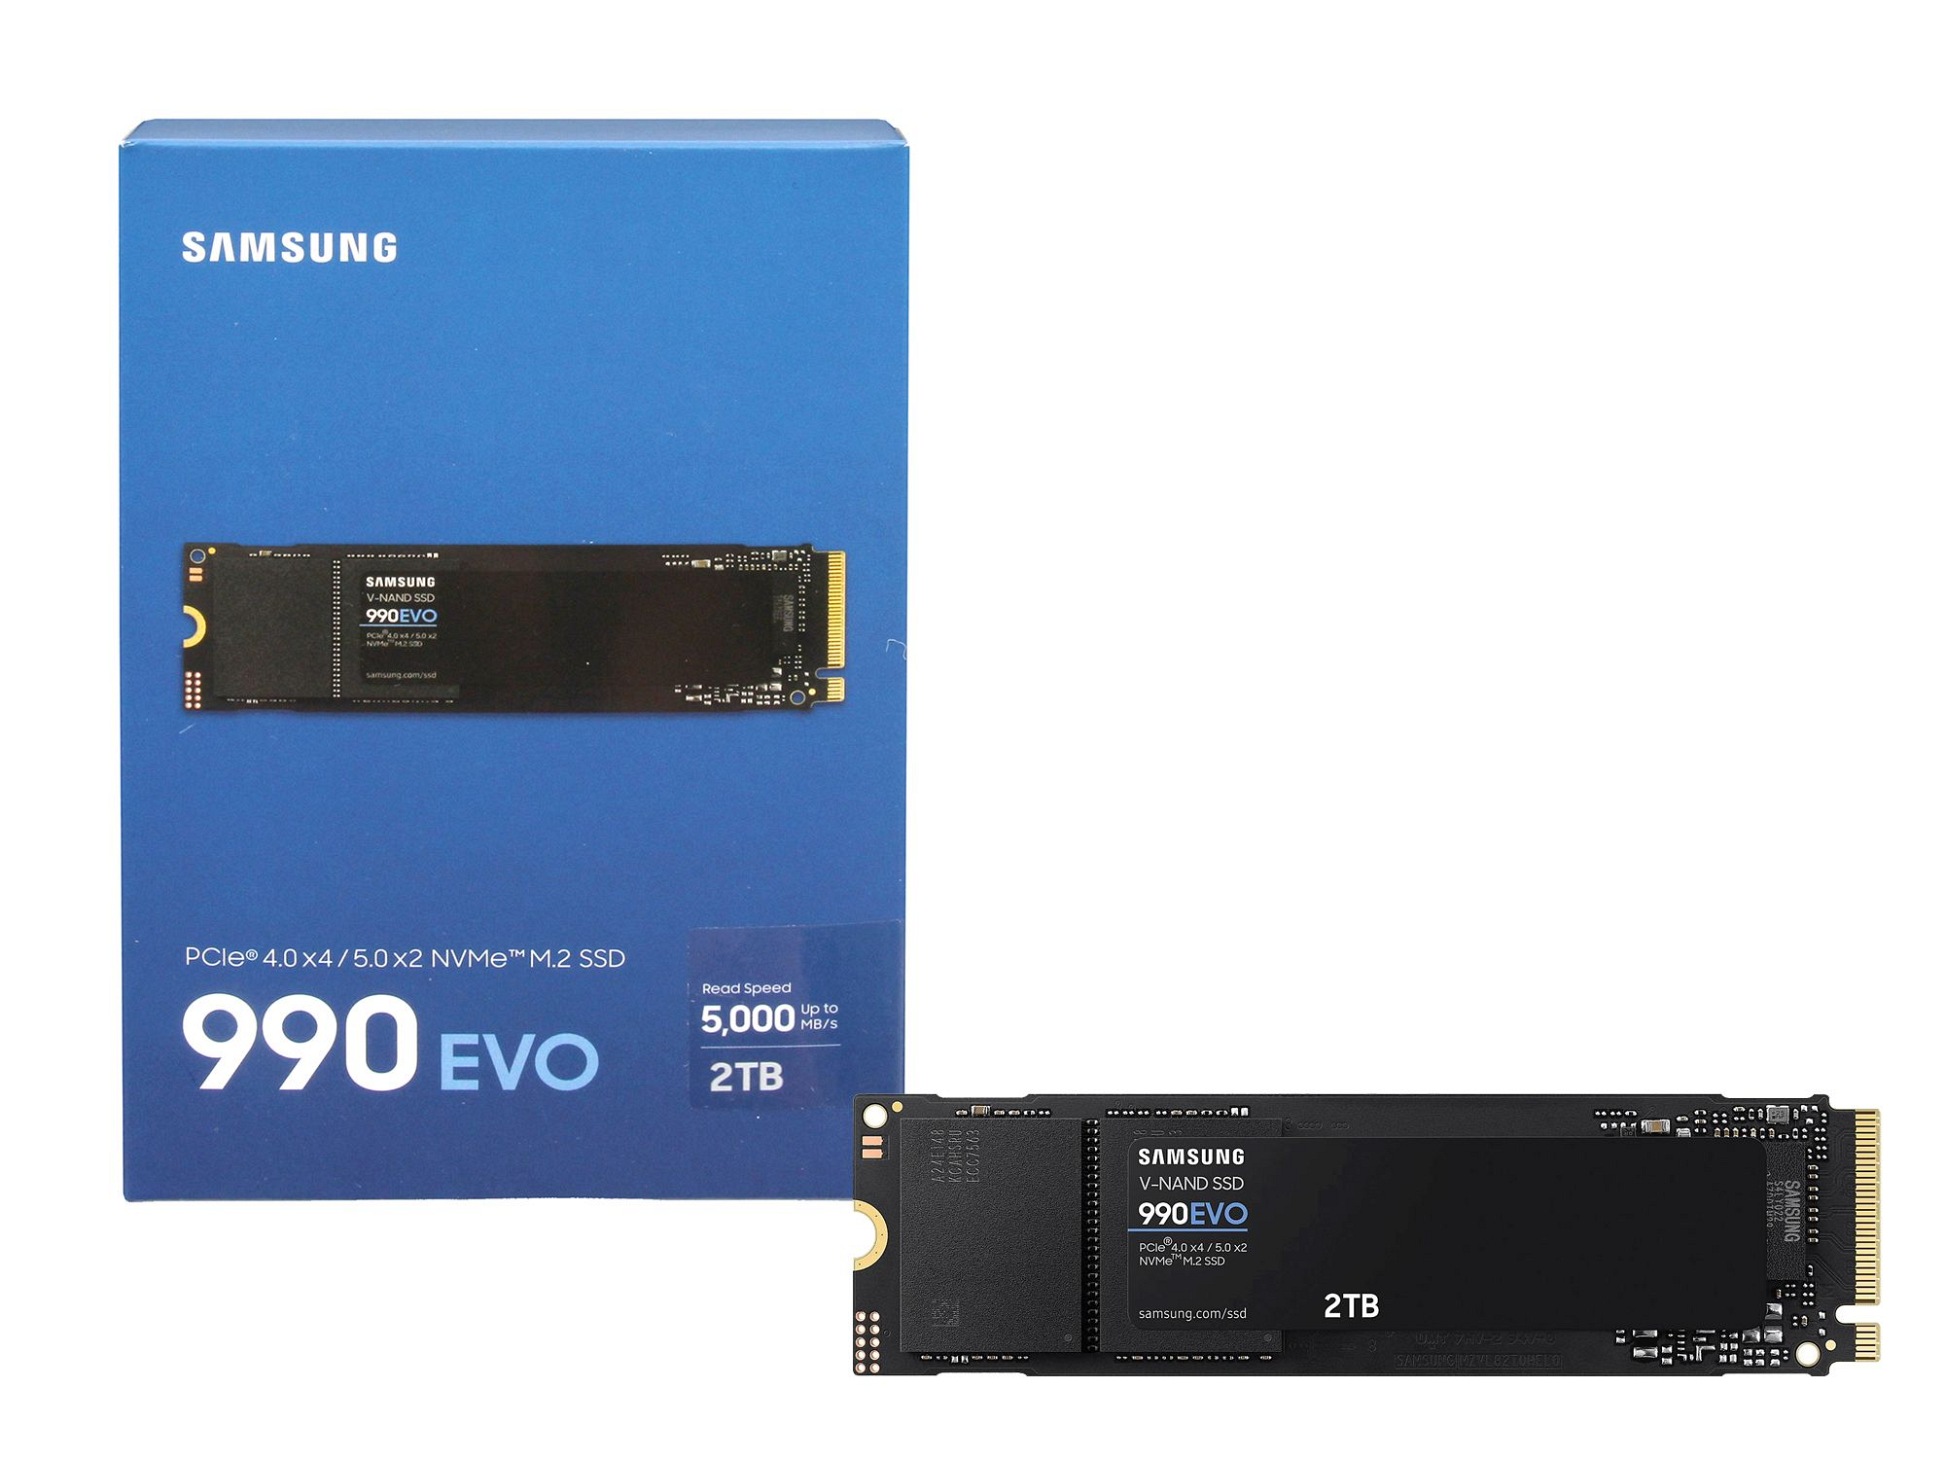 Samsung LA69-02233A Samsung 990 EVO SSD Festplatte 2TB (M.2 22 x 80 mm)